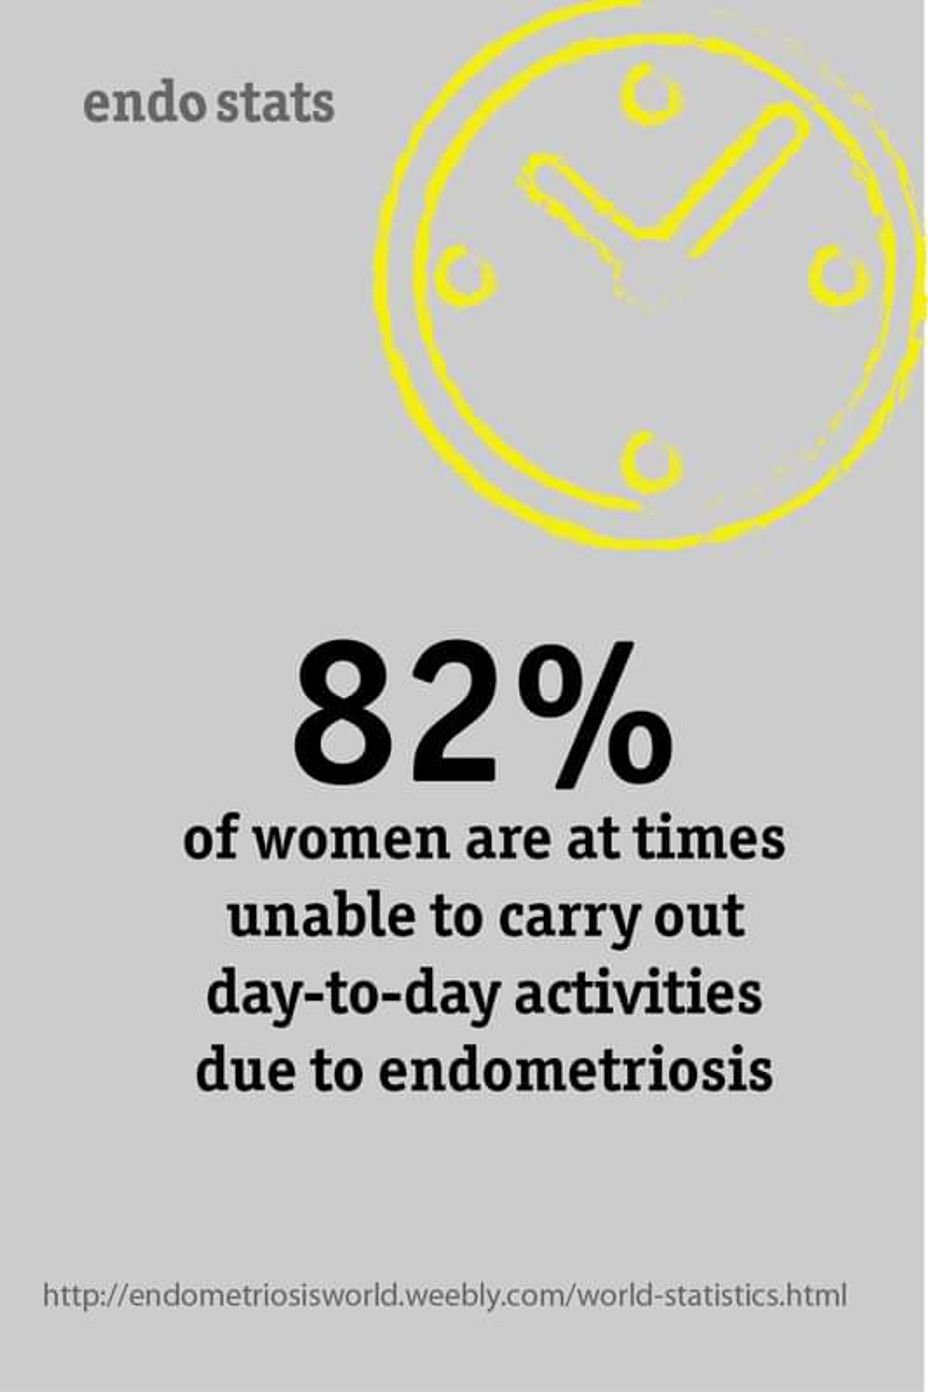 <p><a class="tm-topic-link mighty-topic" title="Endometriosis" href="/topic/endometriosis/" data-id="5b23ce7c00553f33fe99213d" data-name="Endometriosis" aria-label="hashtag Endometriosis">#Endometriosis</a> </p>